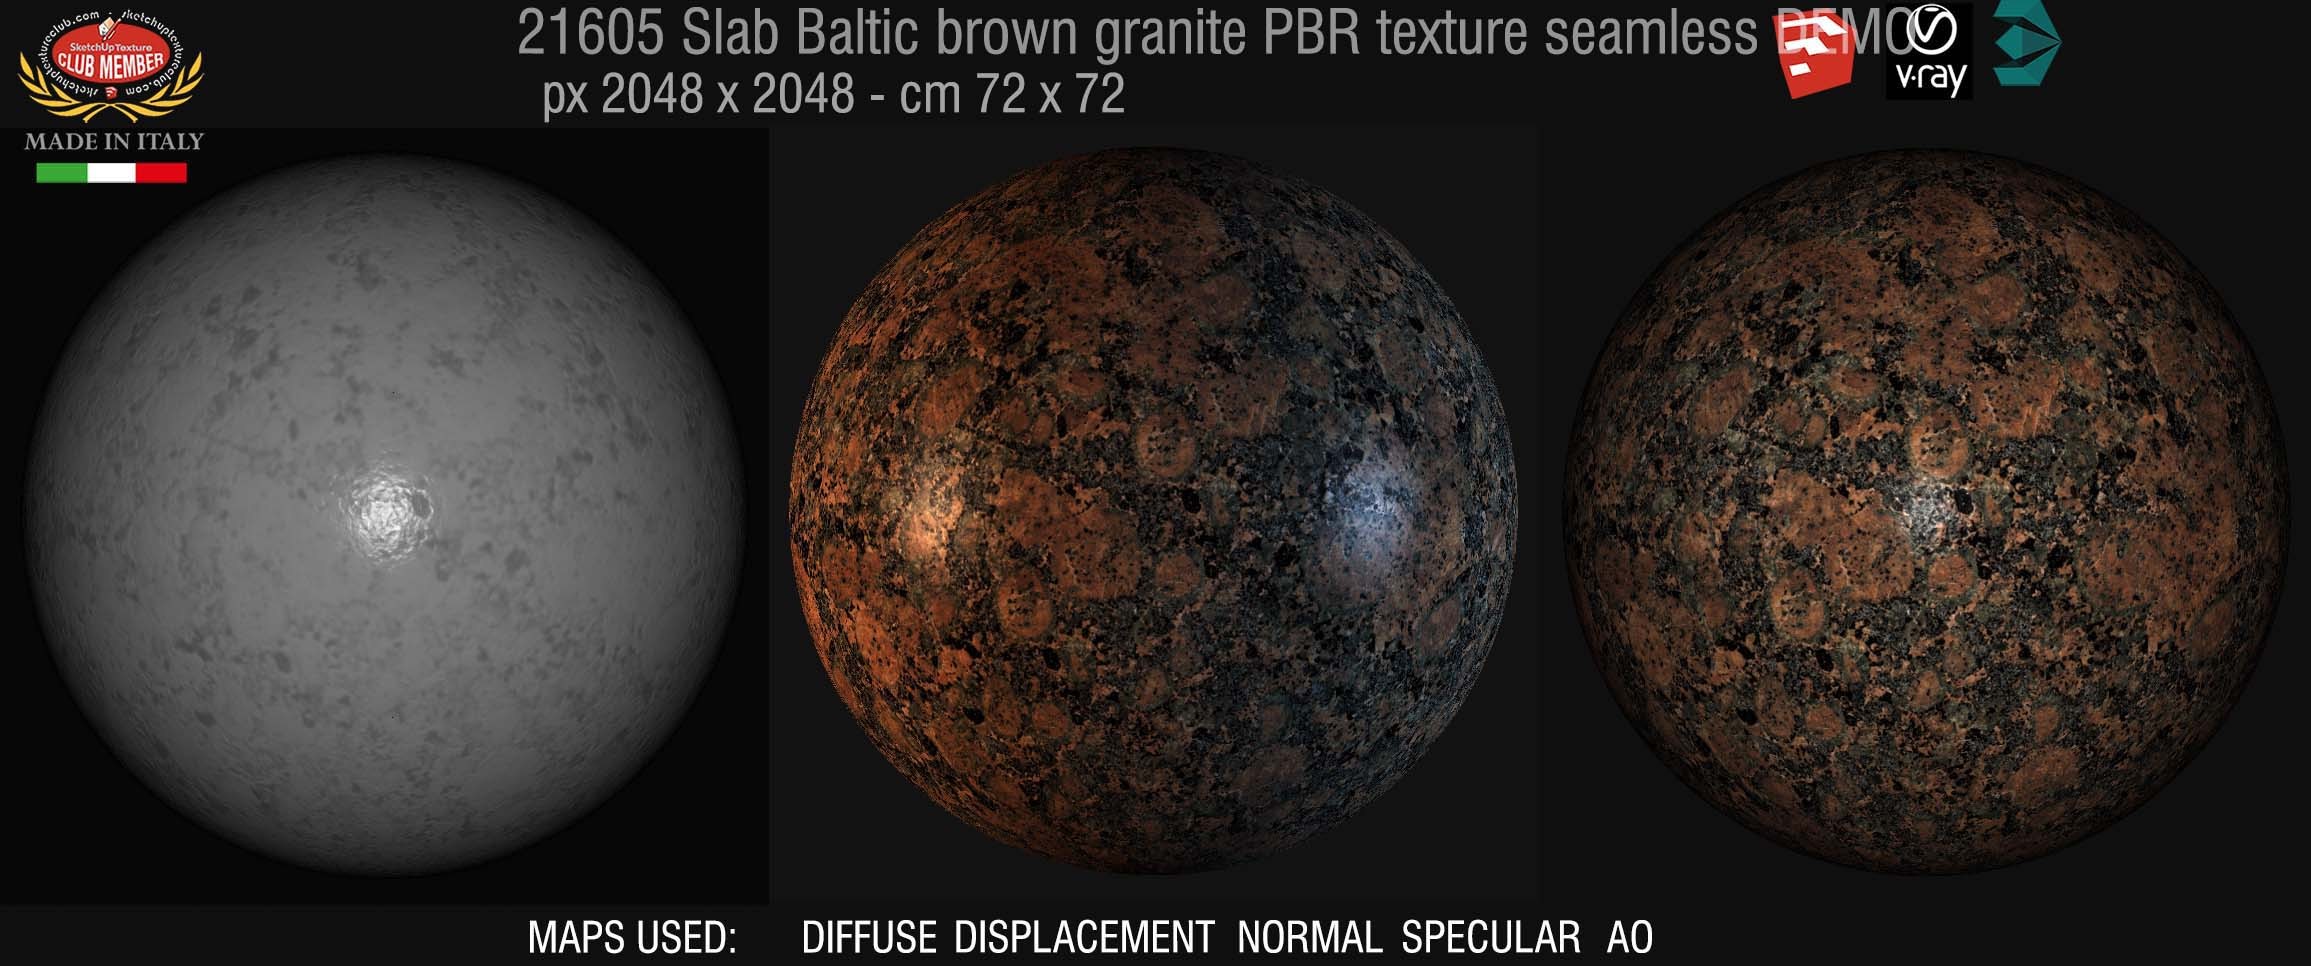 21605 Slab Baltic brown granite PBR texture seamless demo